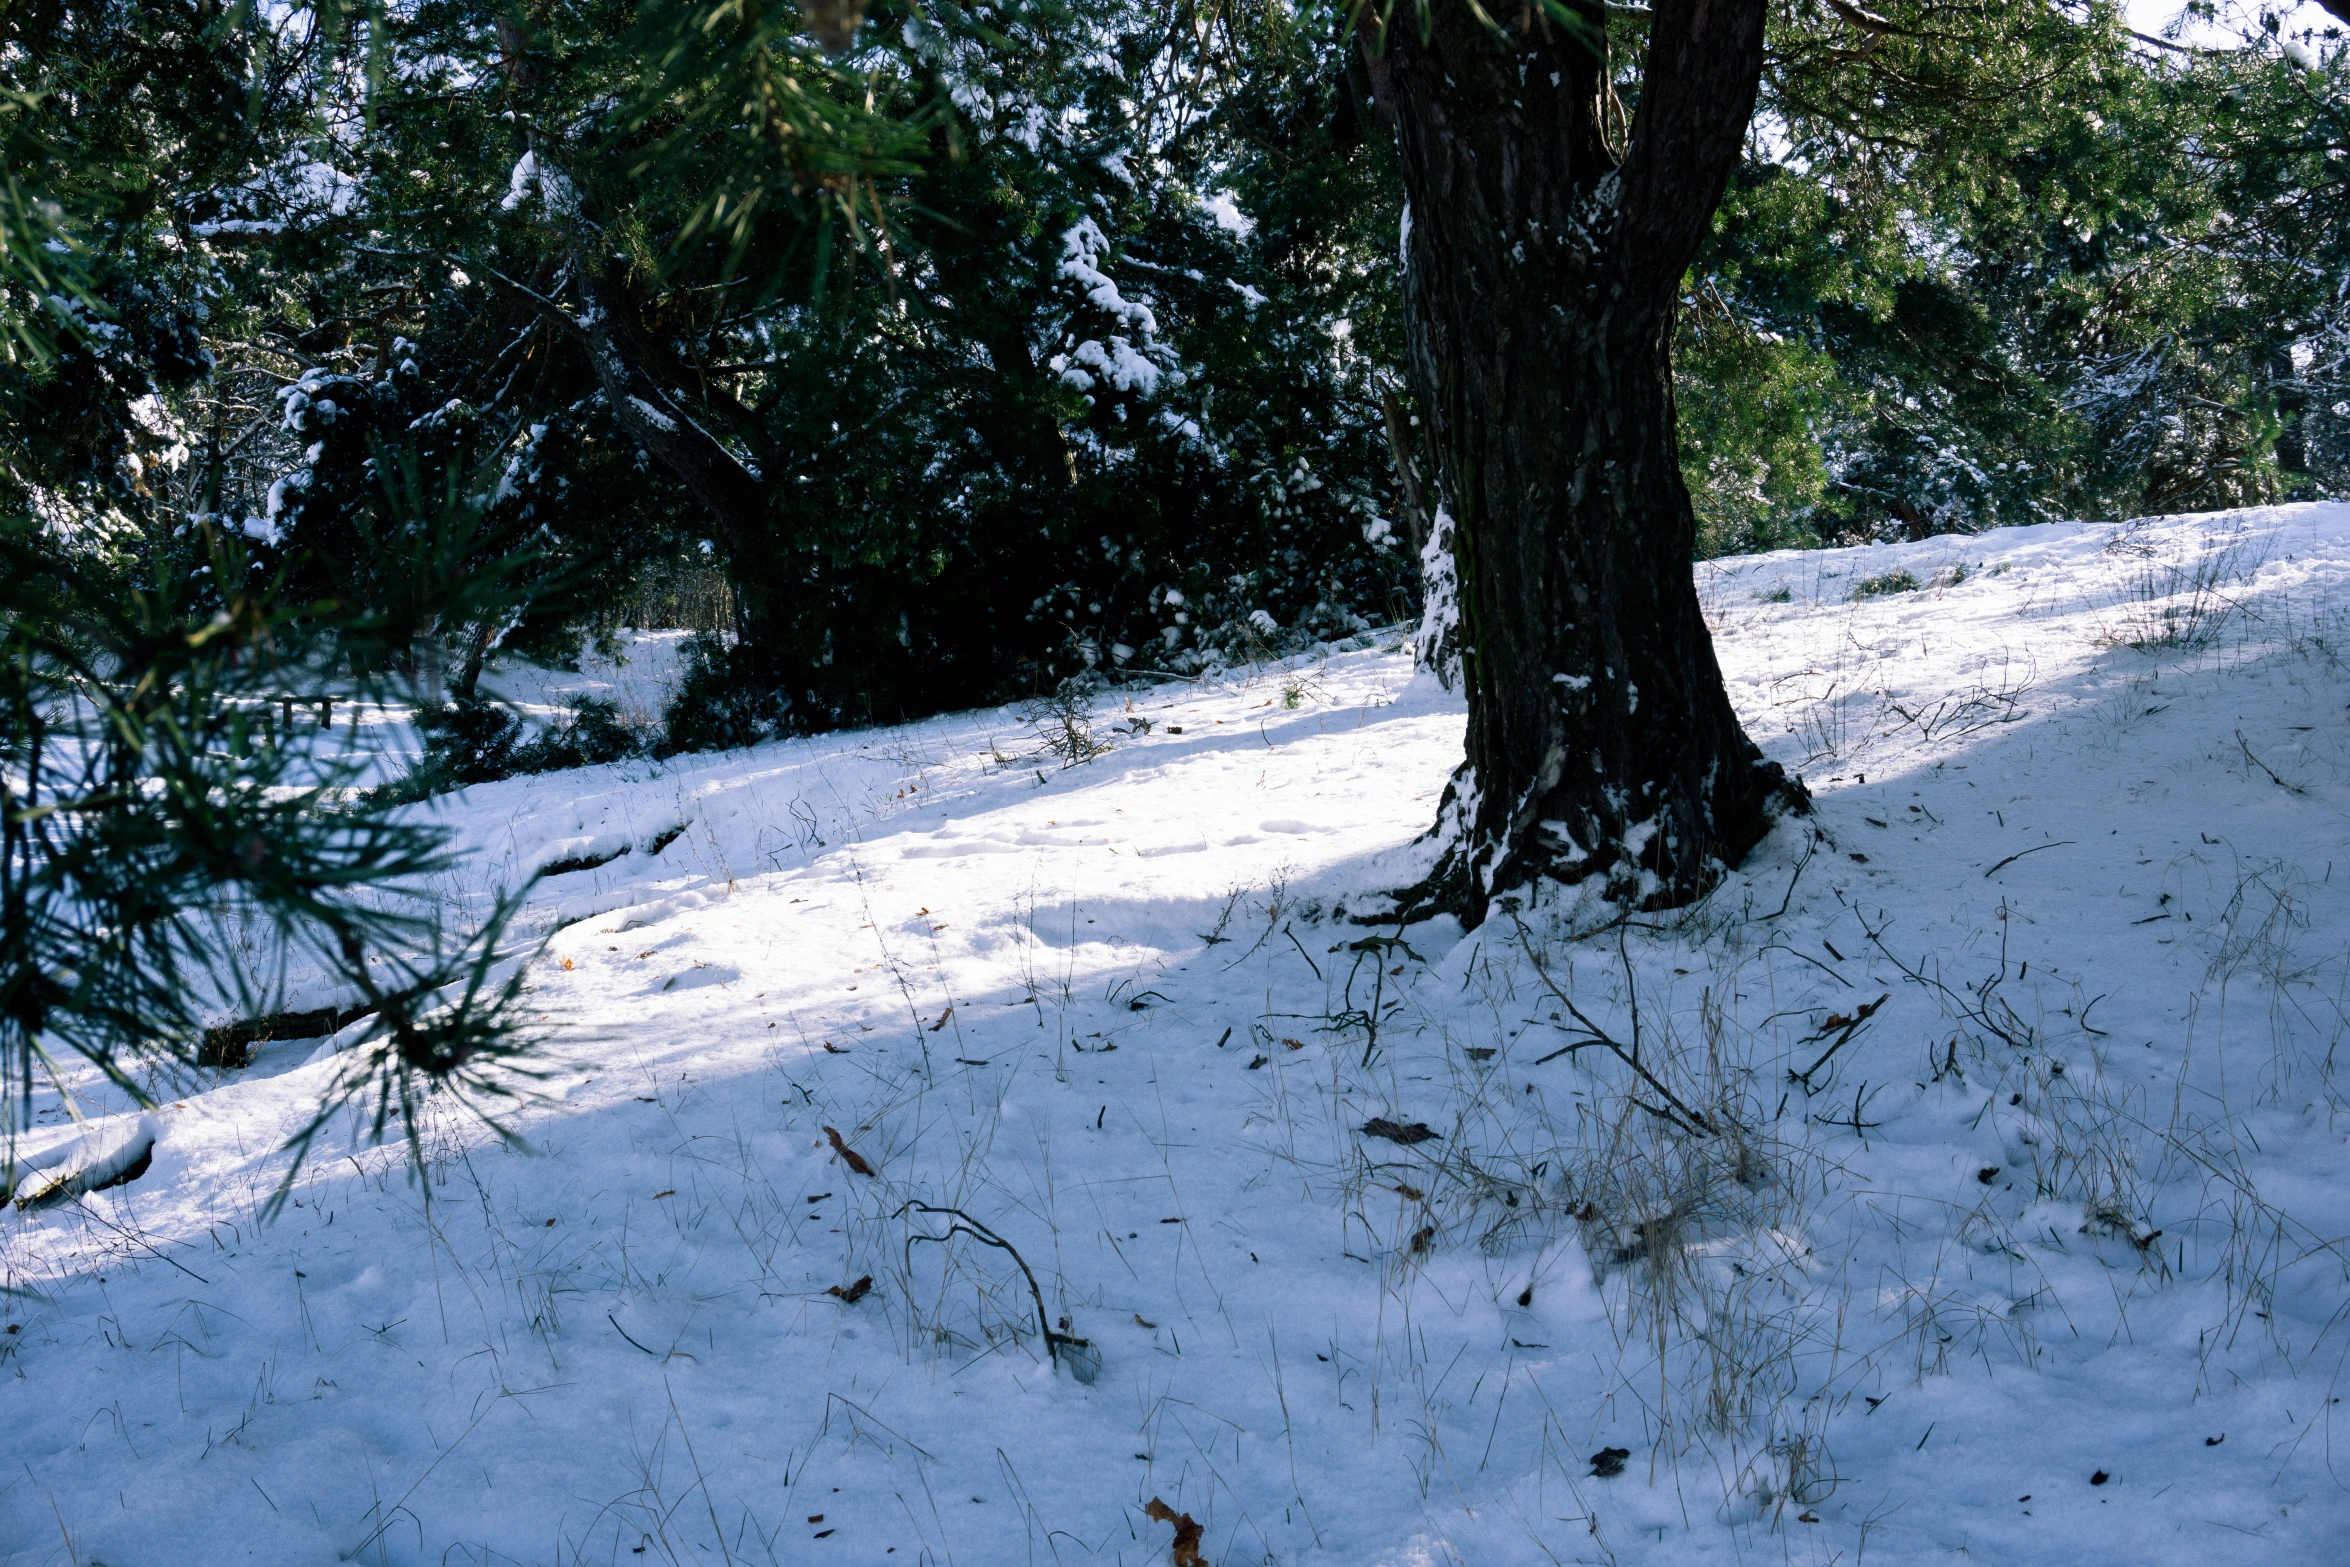 a snow covered hillside near a tree line